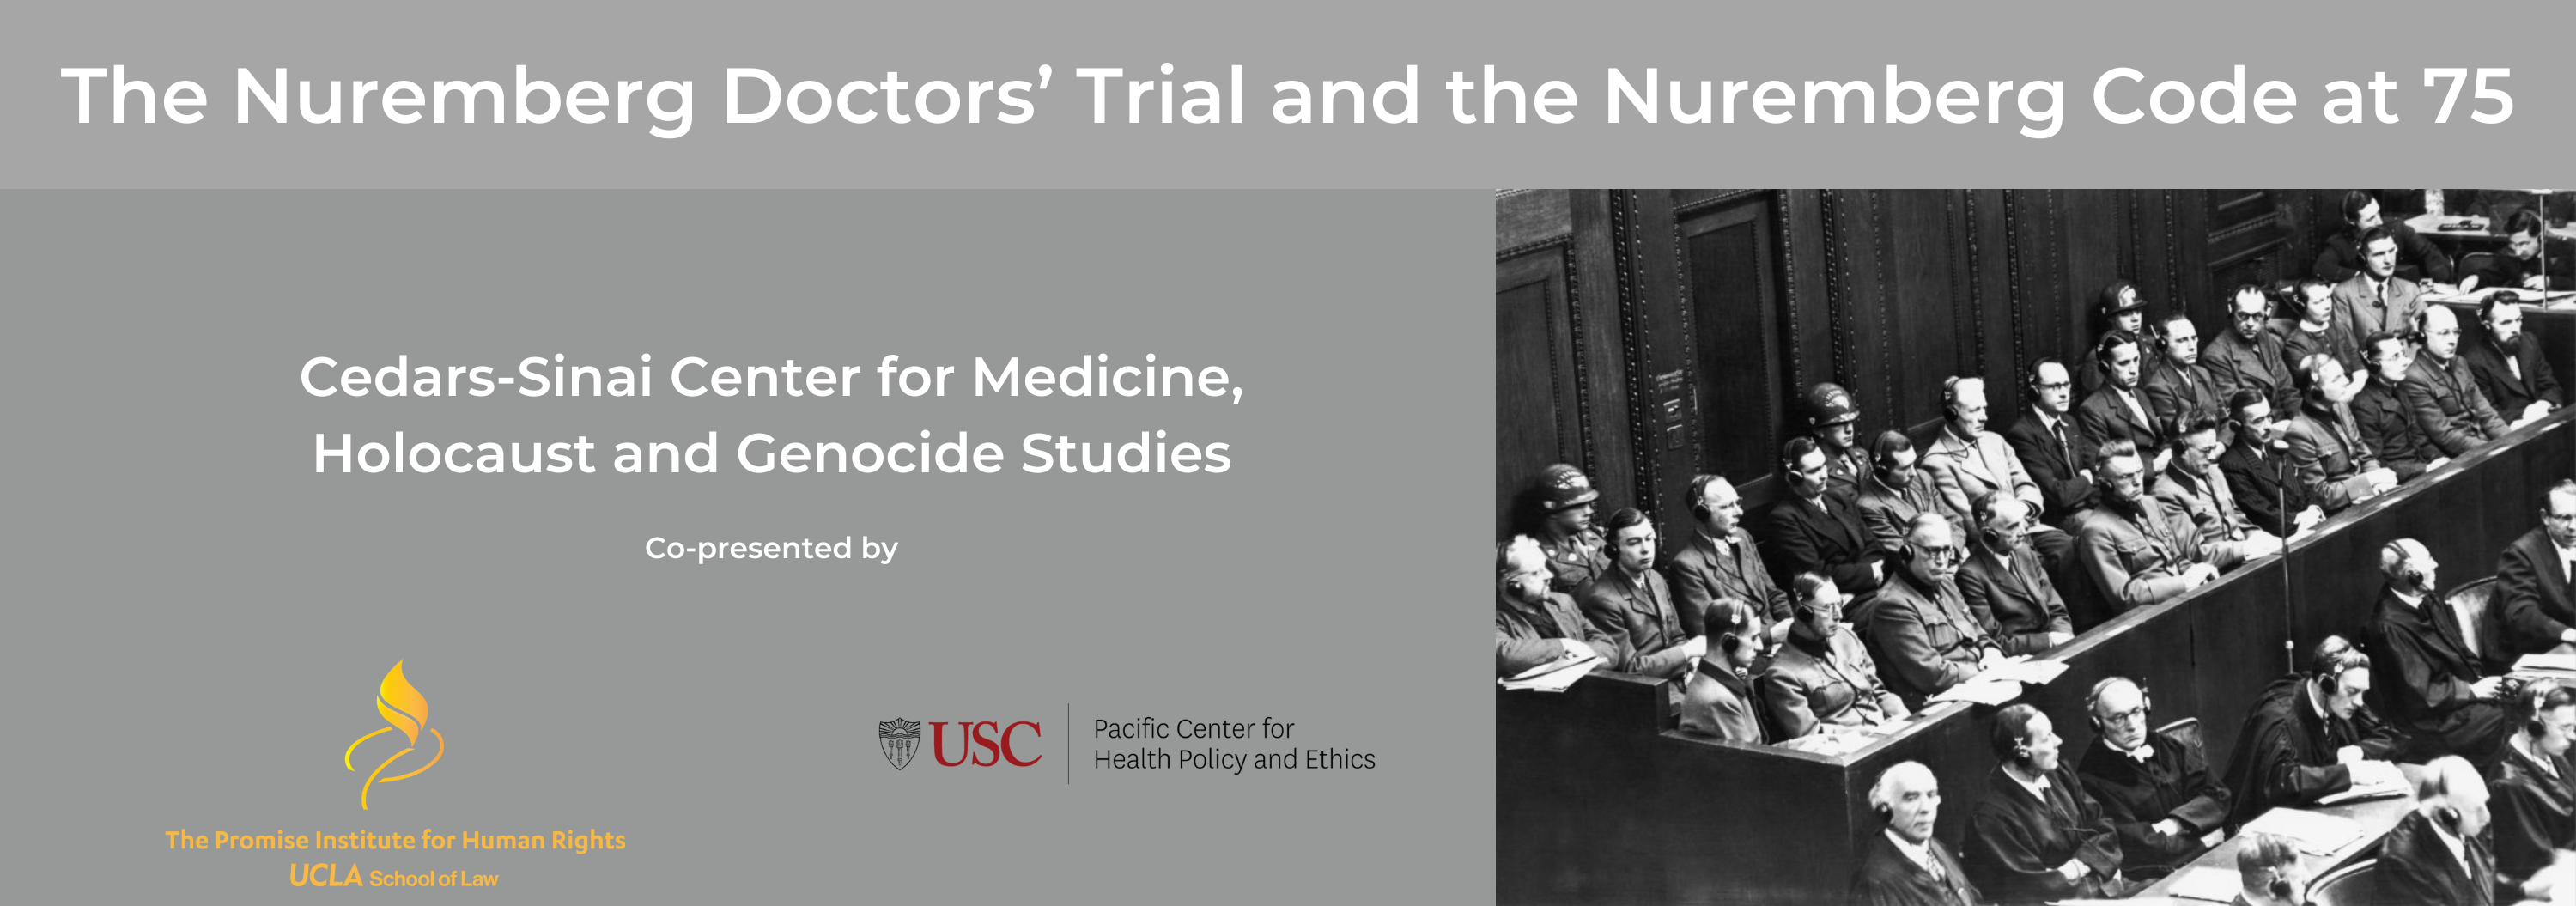 The Nuremberg Doctors' Trial and the Nuremberg Code at 75